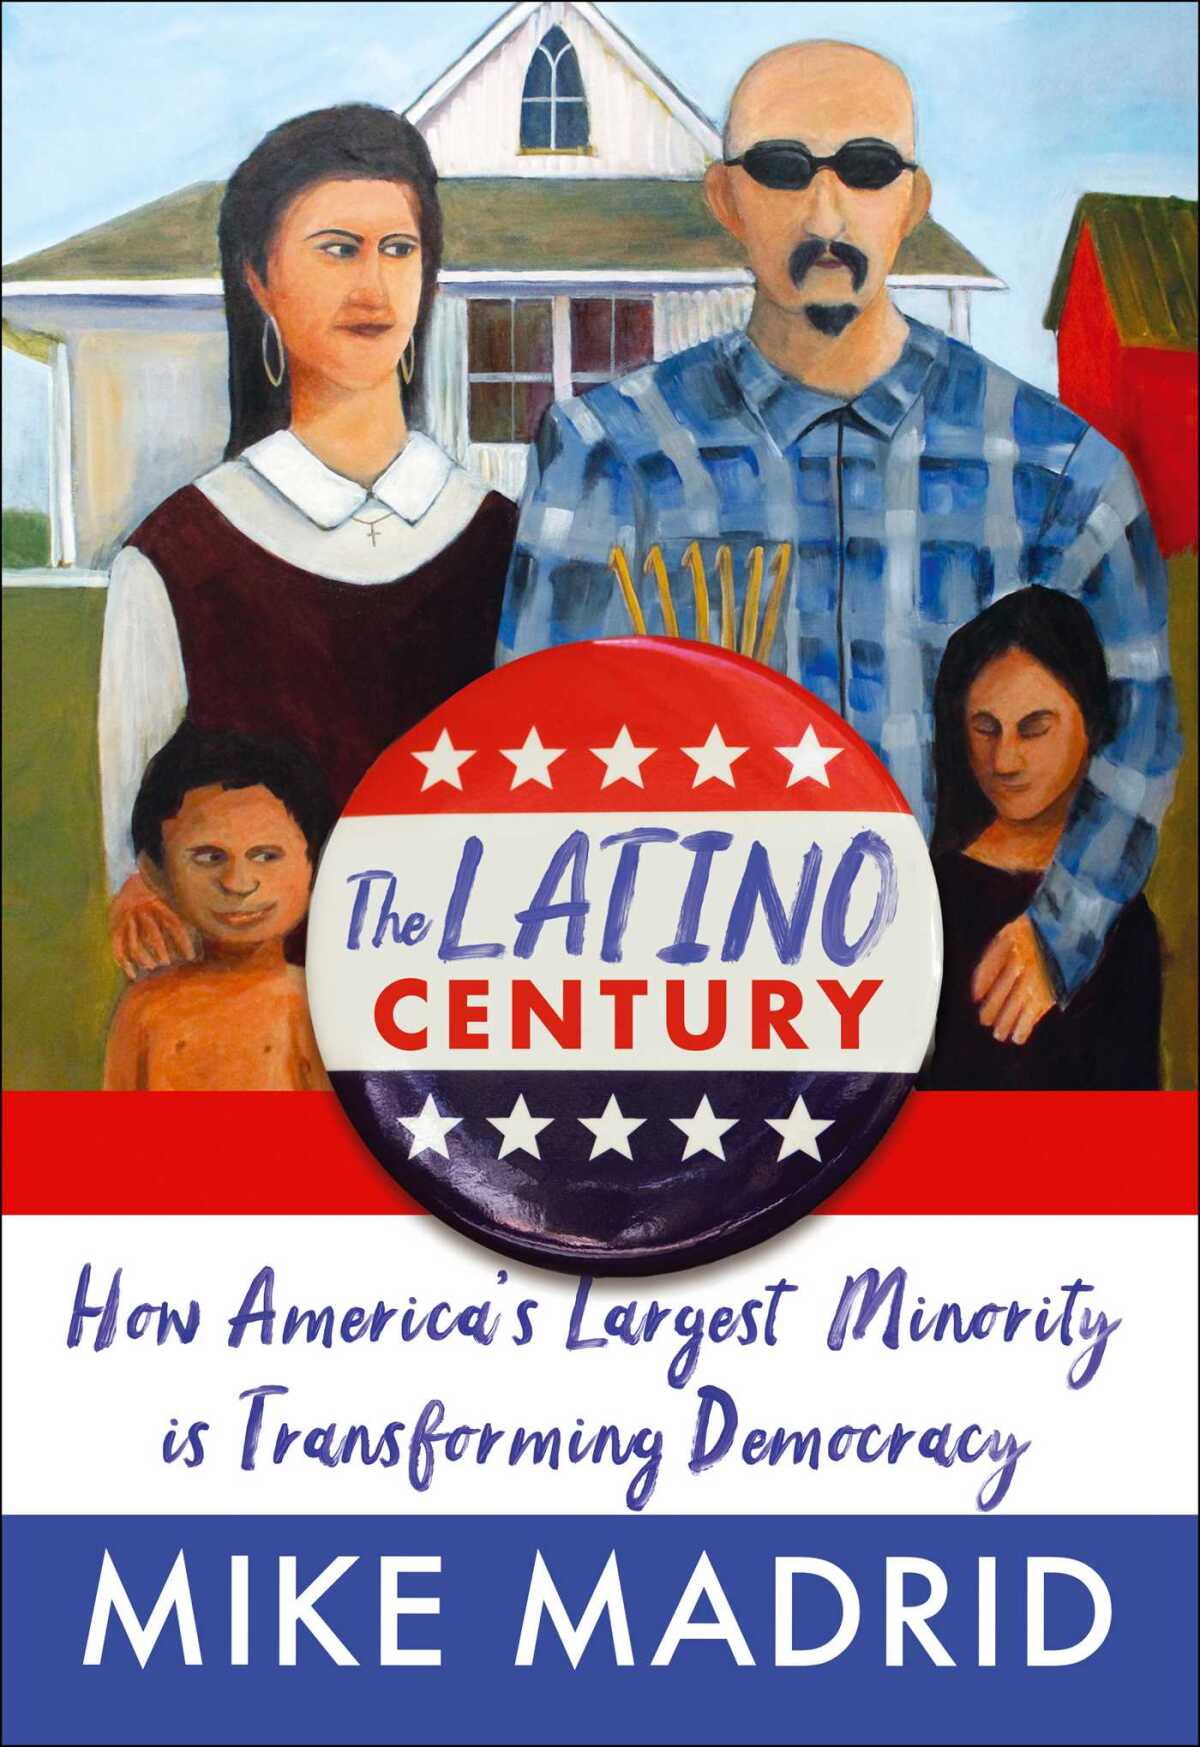 "Latino Century" flap